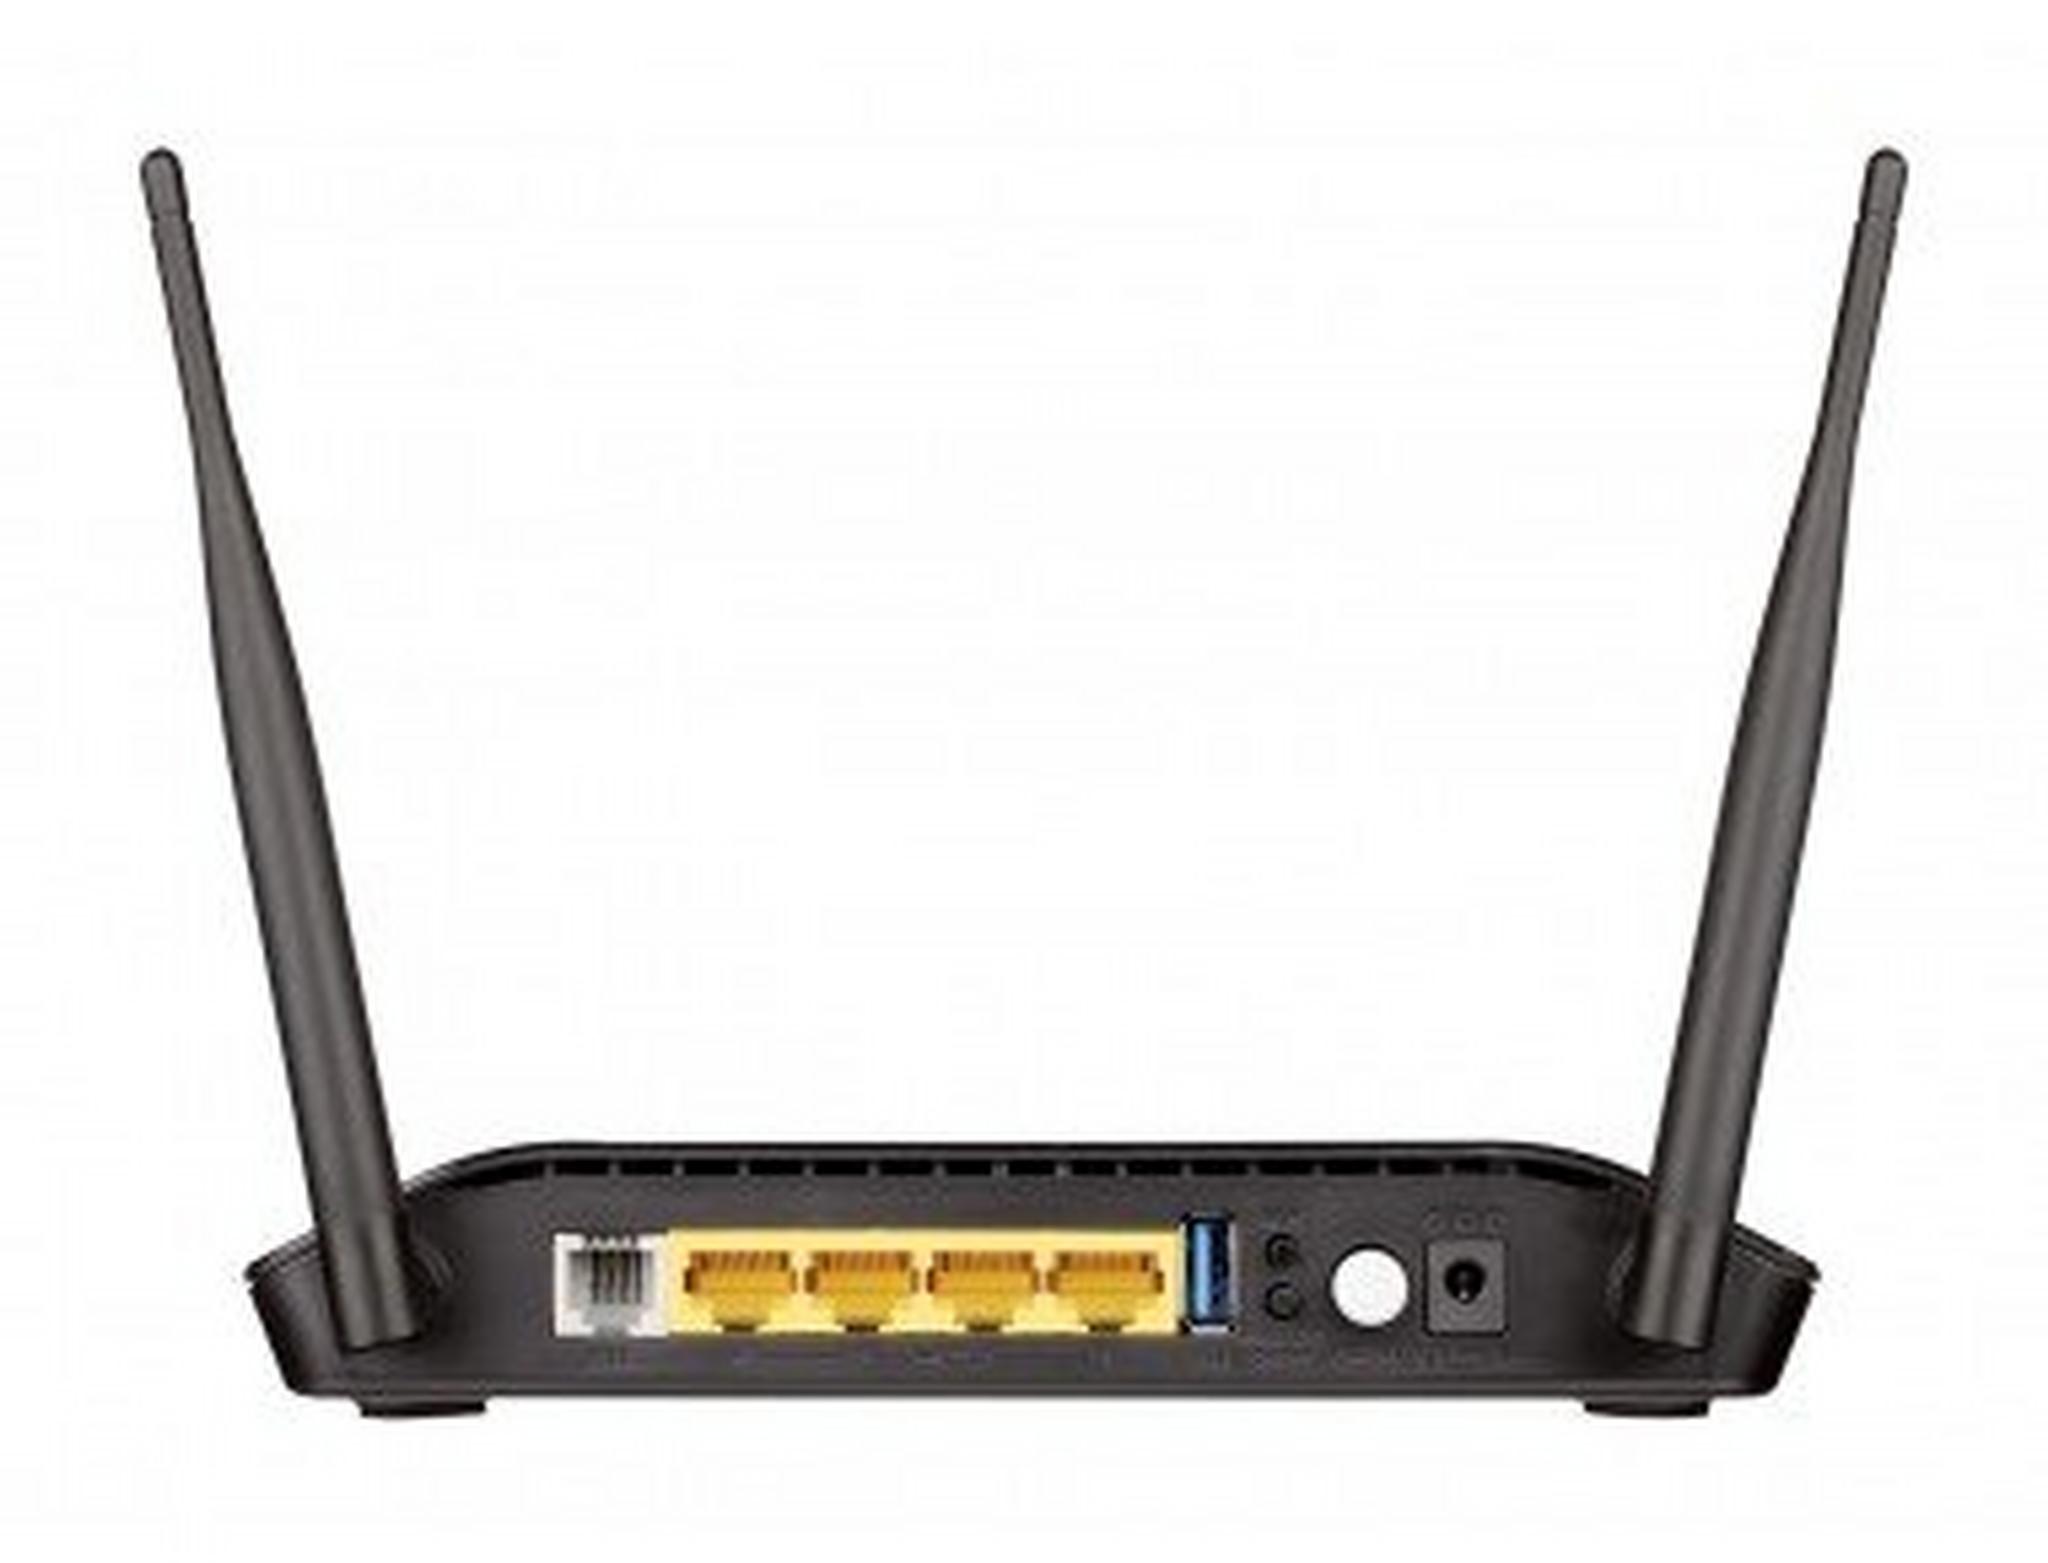 Dlink DSL-2740U ADSL2 Modem + 4Port wireless router Combo